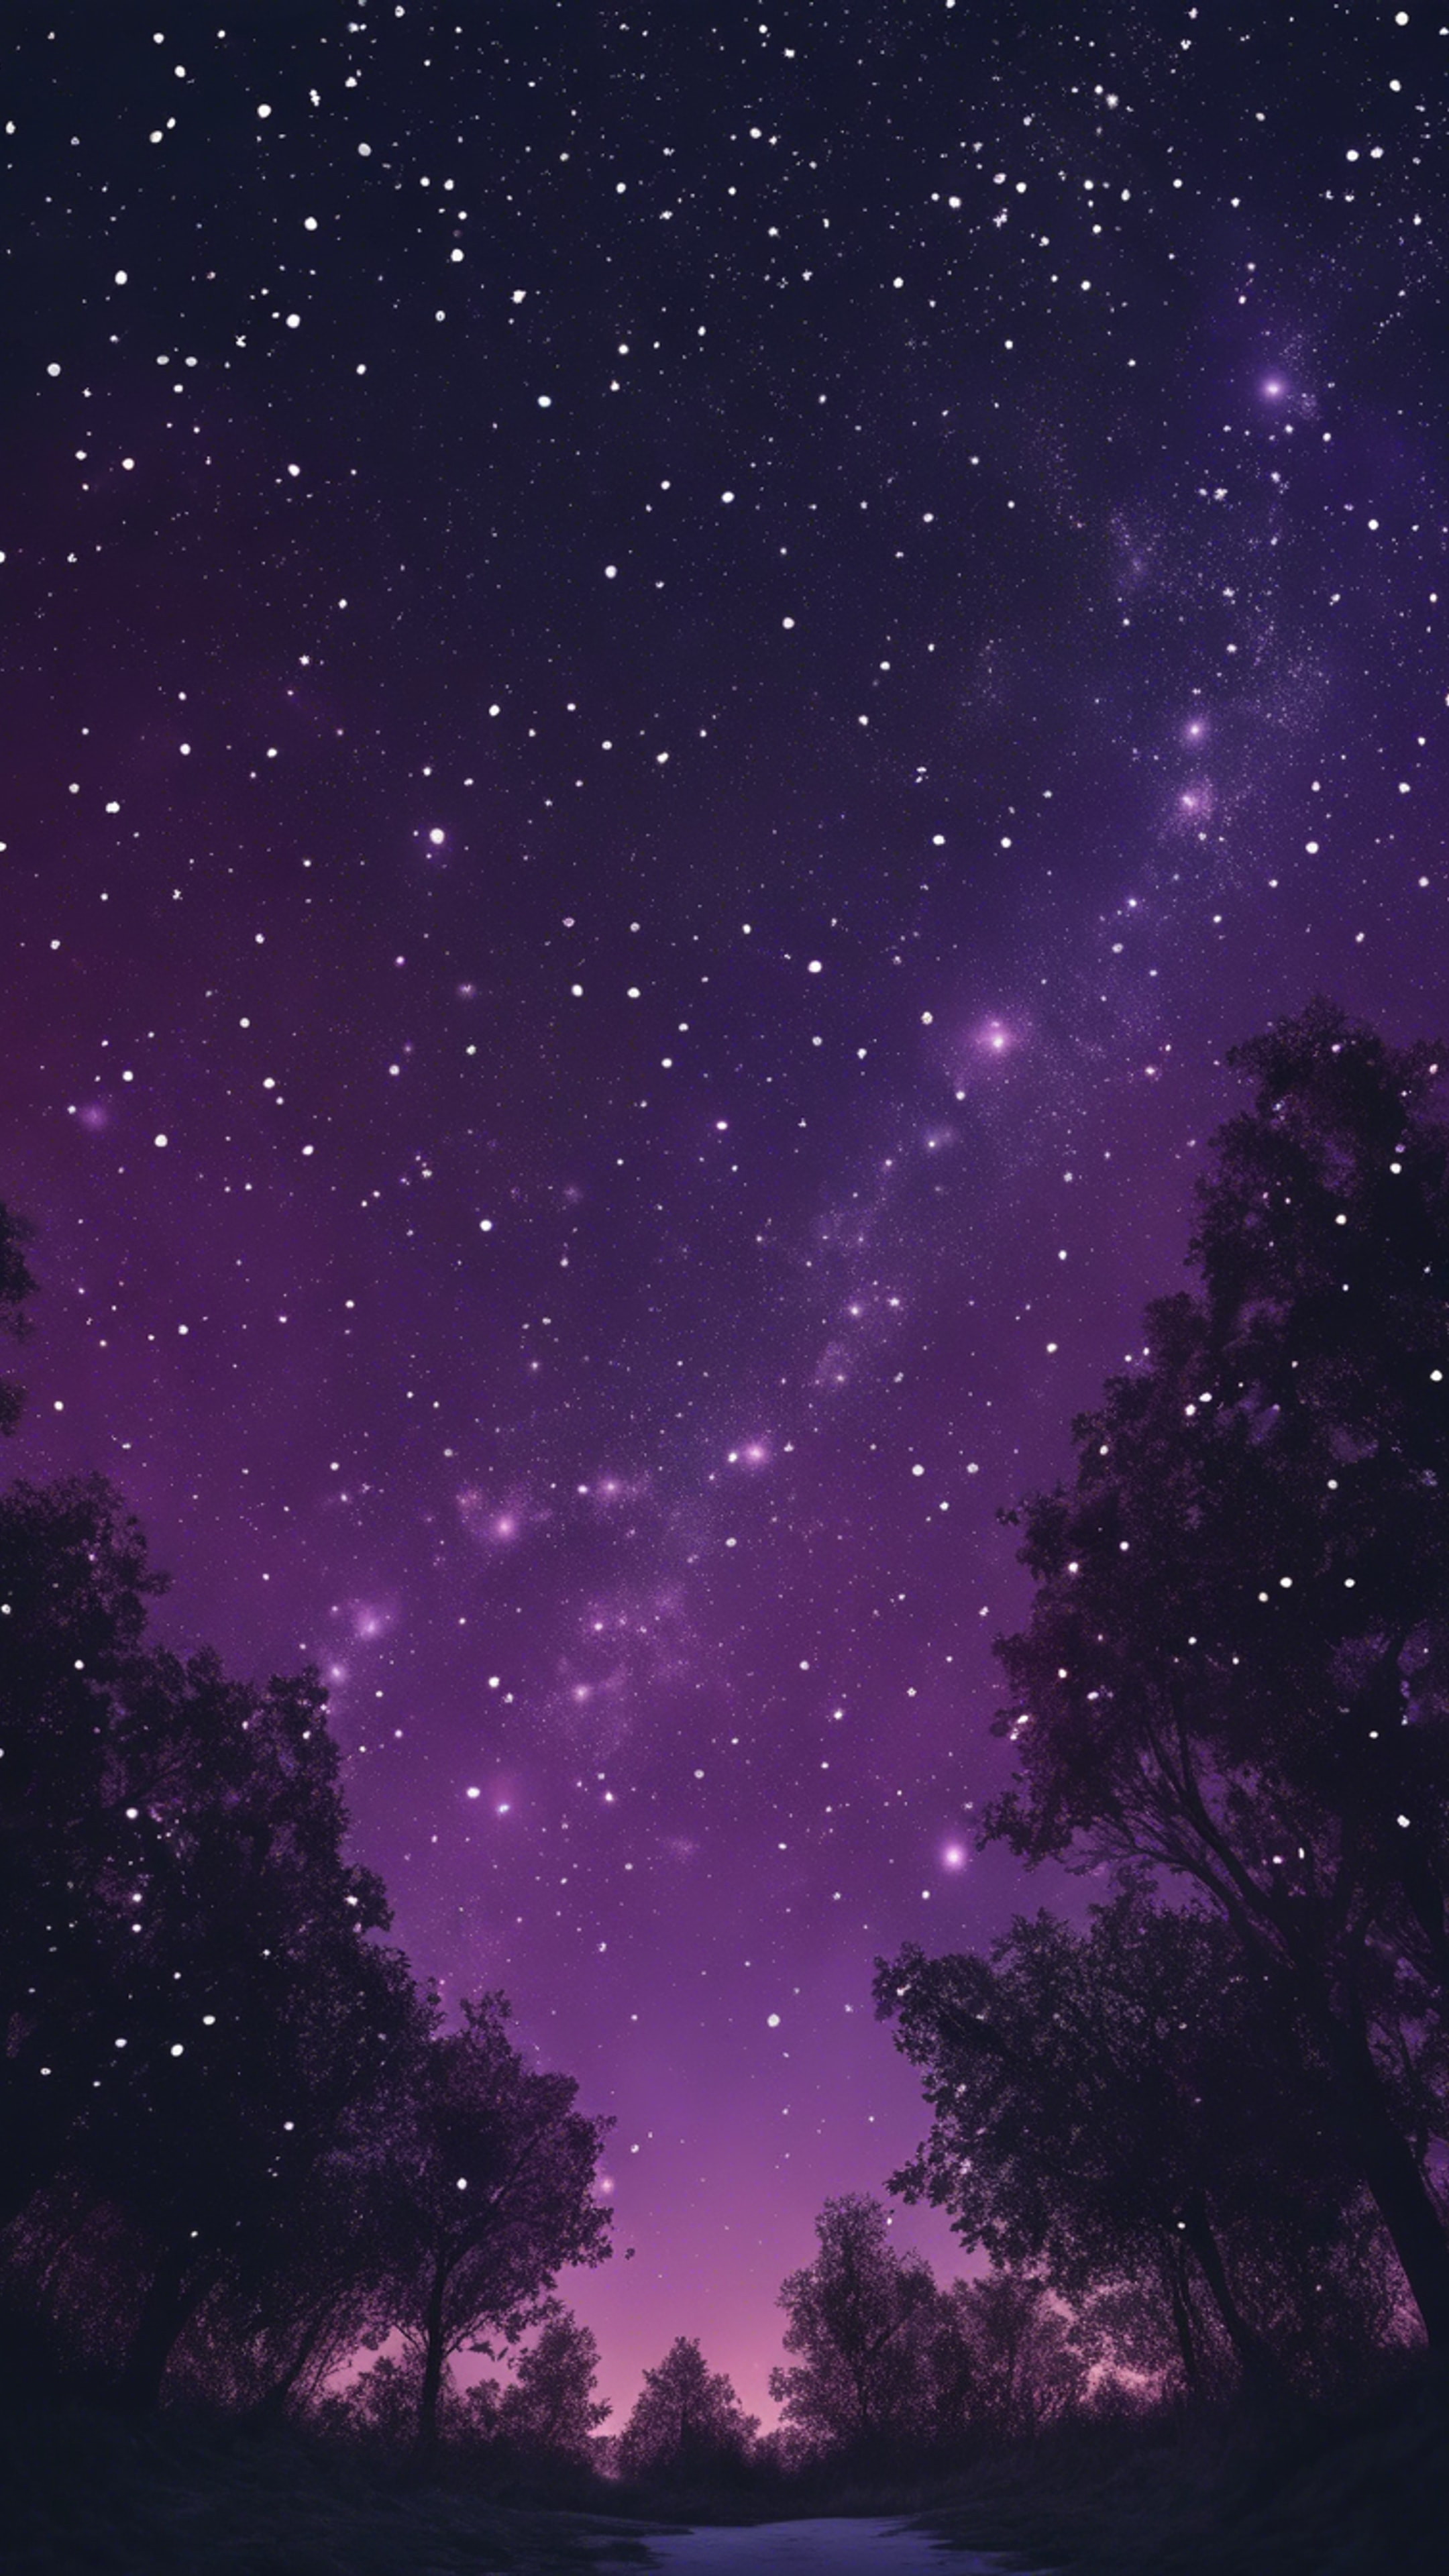 A dark purple night sky filled with glistening stars.壁紙[87bc6c810d2c46c9bff9]